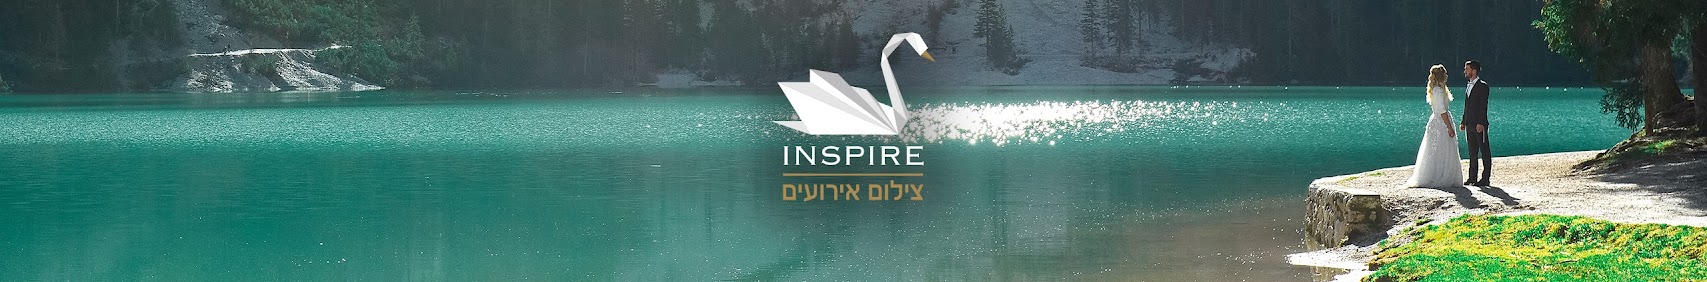 inspire - אינספאייר תיעוד אירועי יוקרה - YouTube